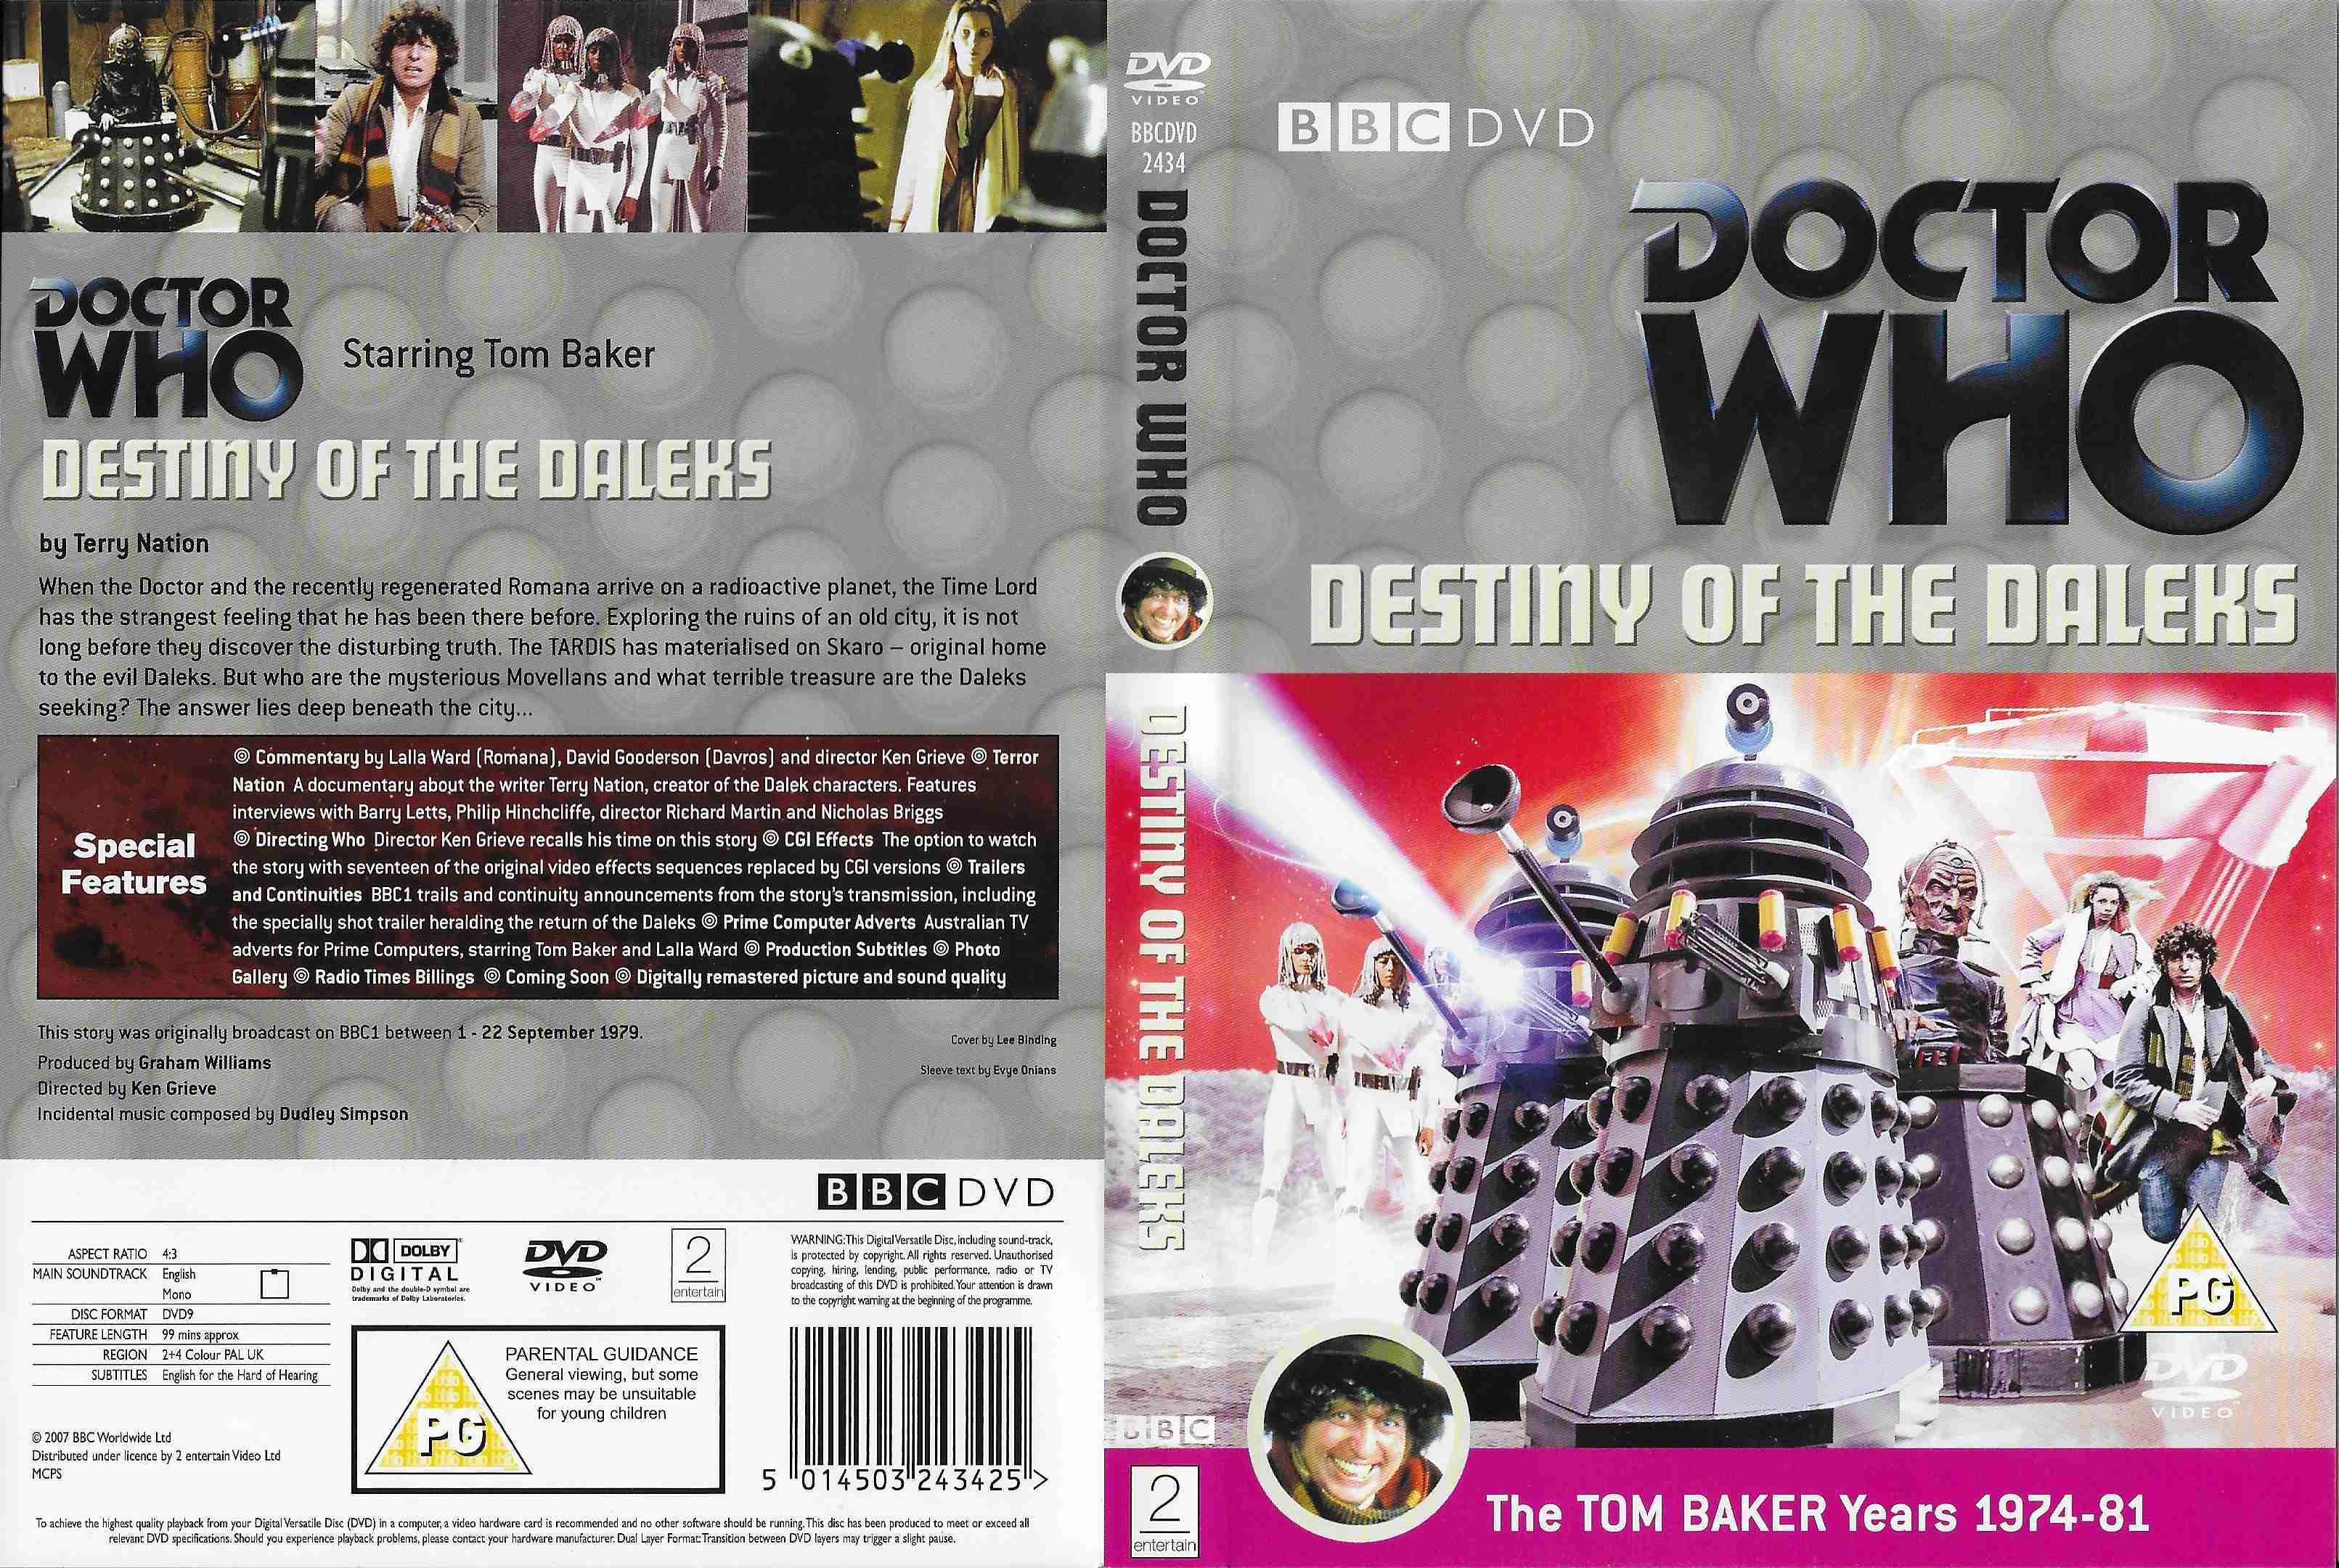 Back cover of BBCDVD 2434